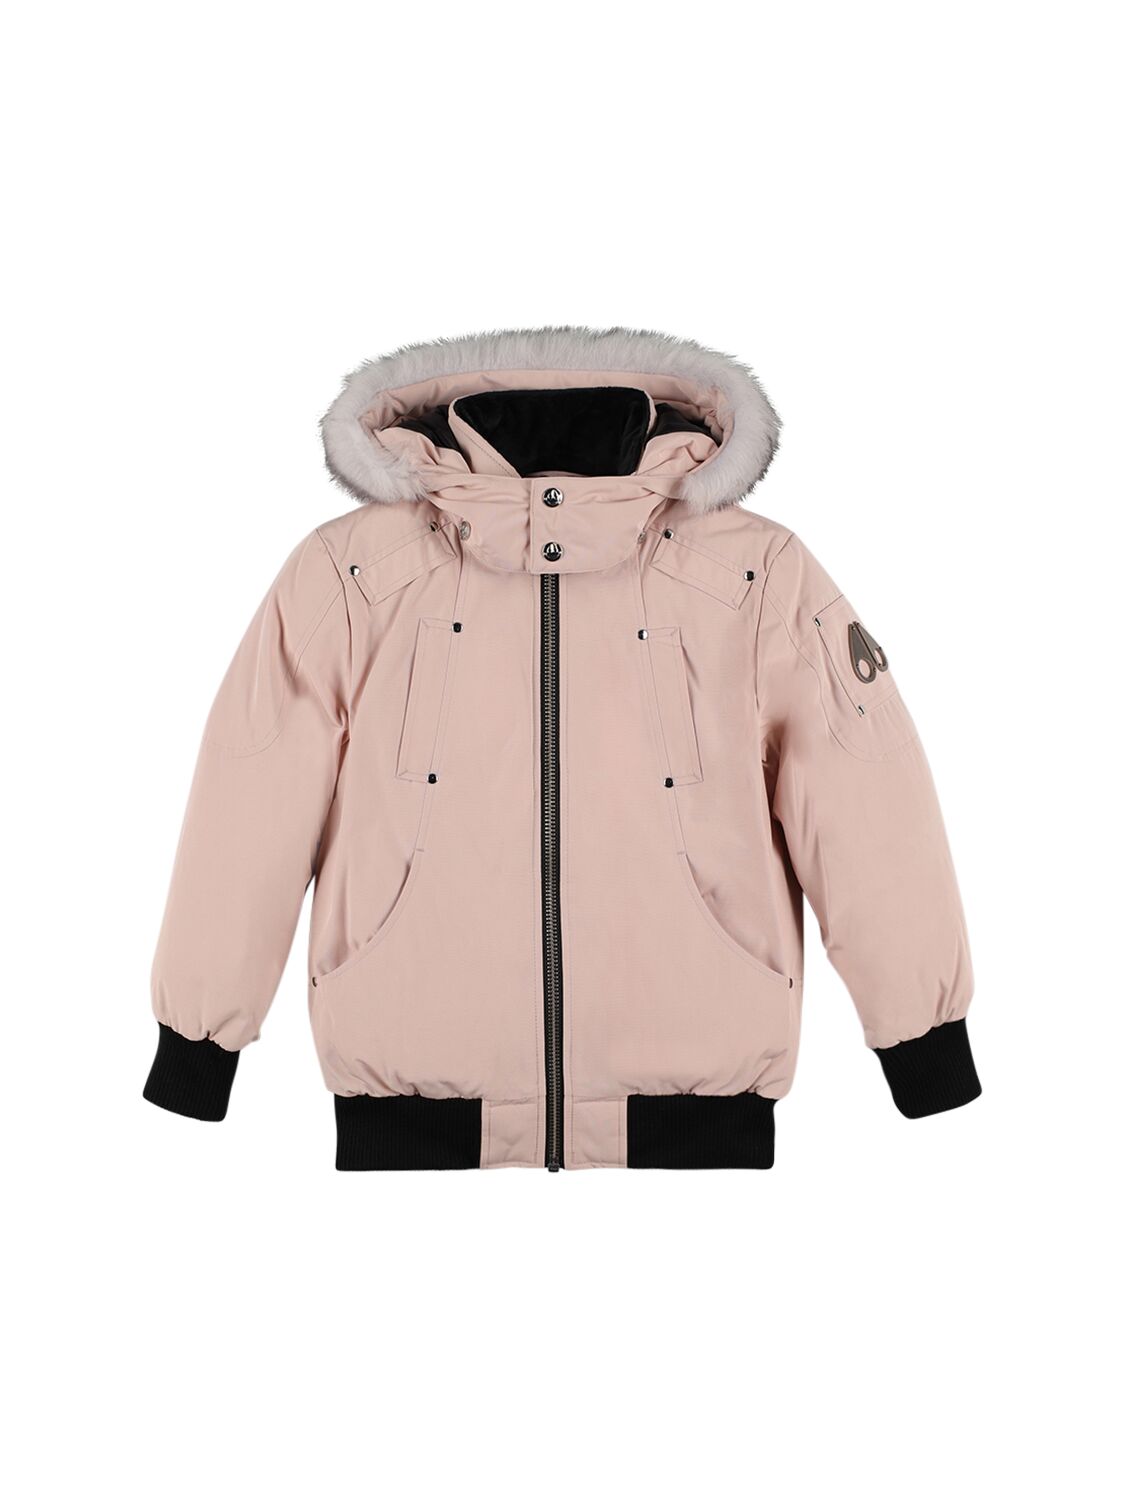 Moose Knuckles Babies' Nylon Down Bomber Jacket W/ Fur In Pink